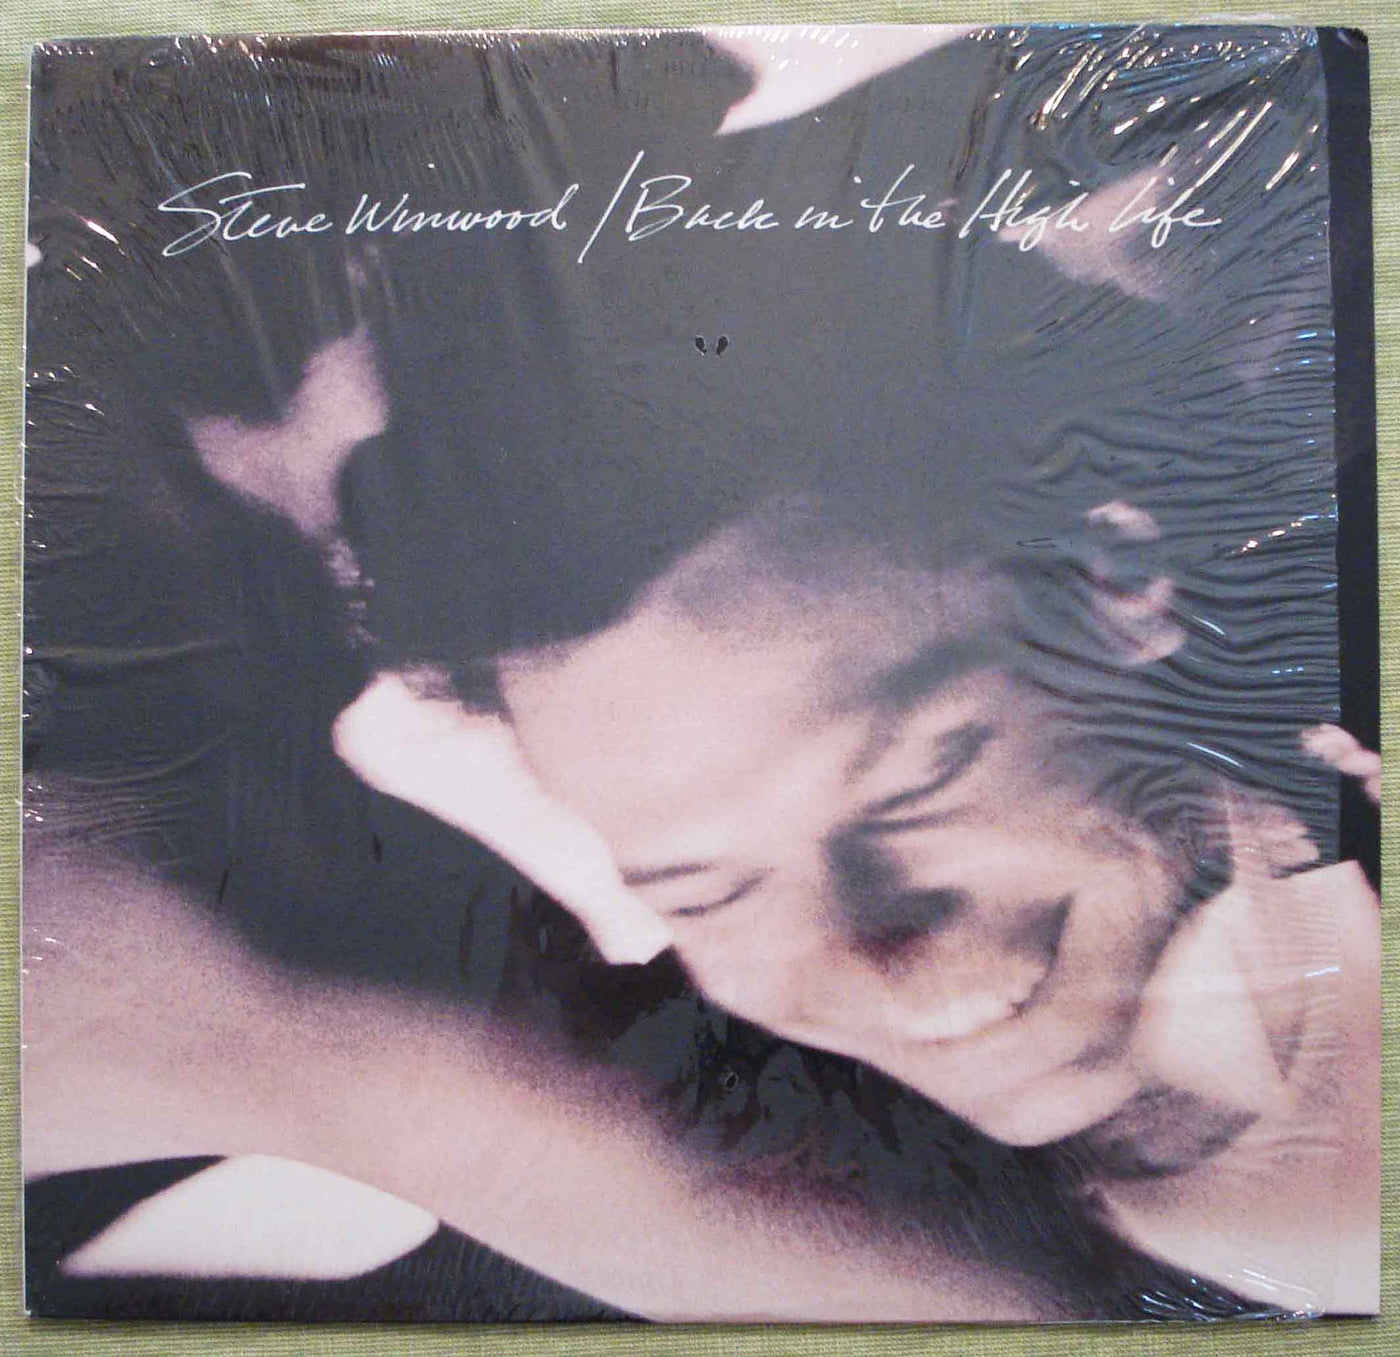 Steve Winwood - Back in the High Life (1986) Vinyl LP 33rpm R-153271